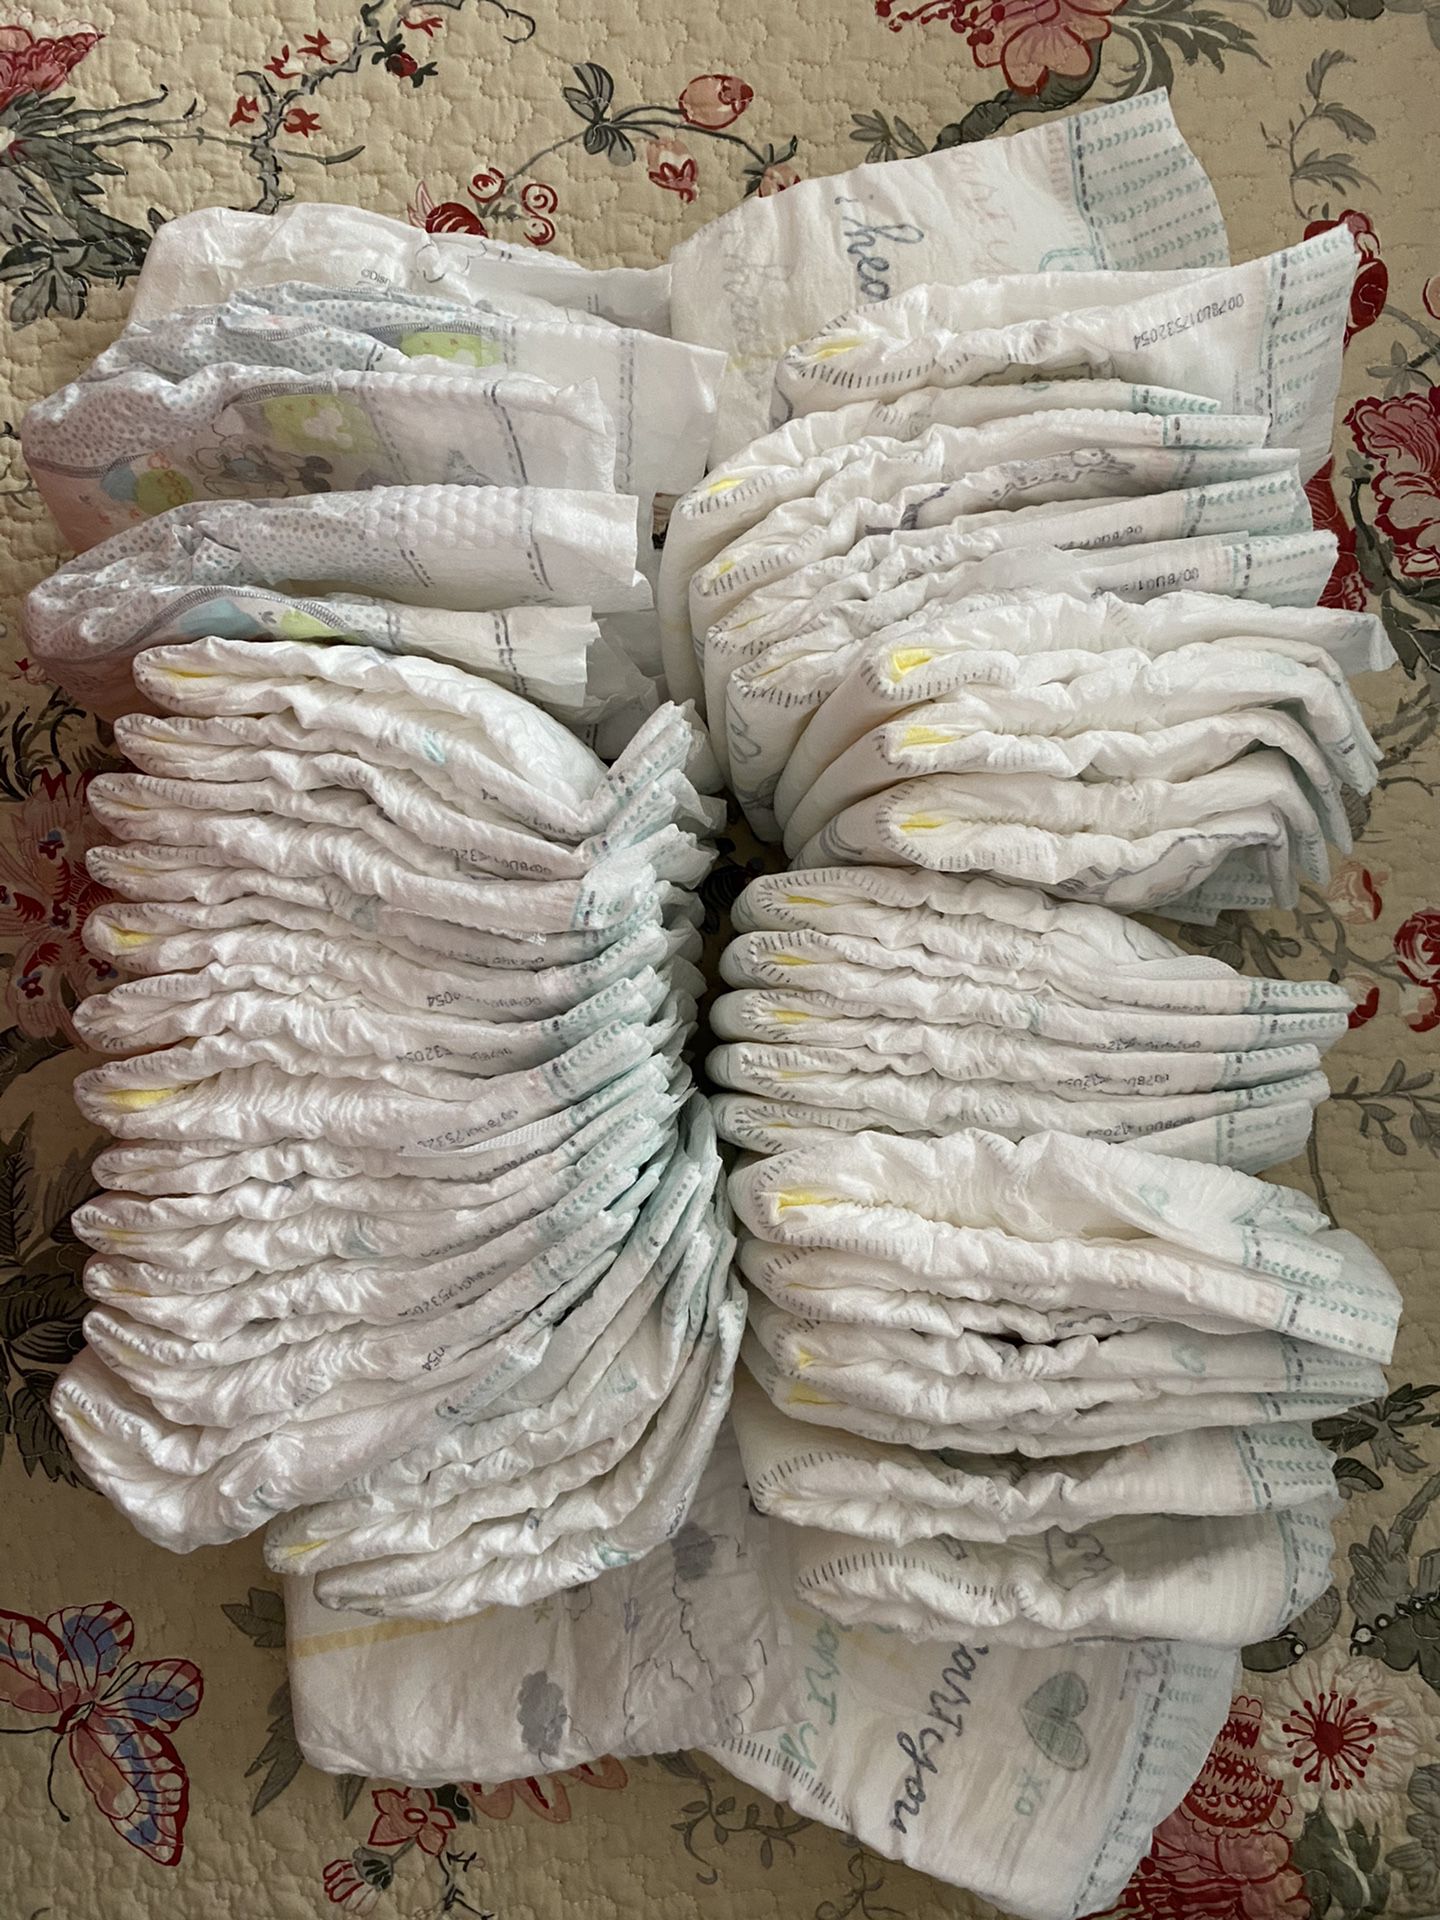 42 newborn diapers